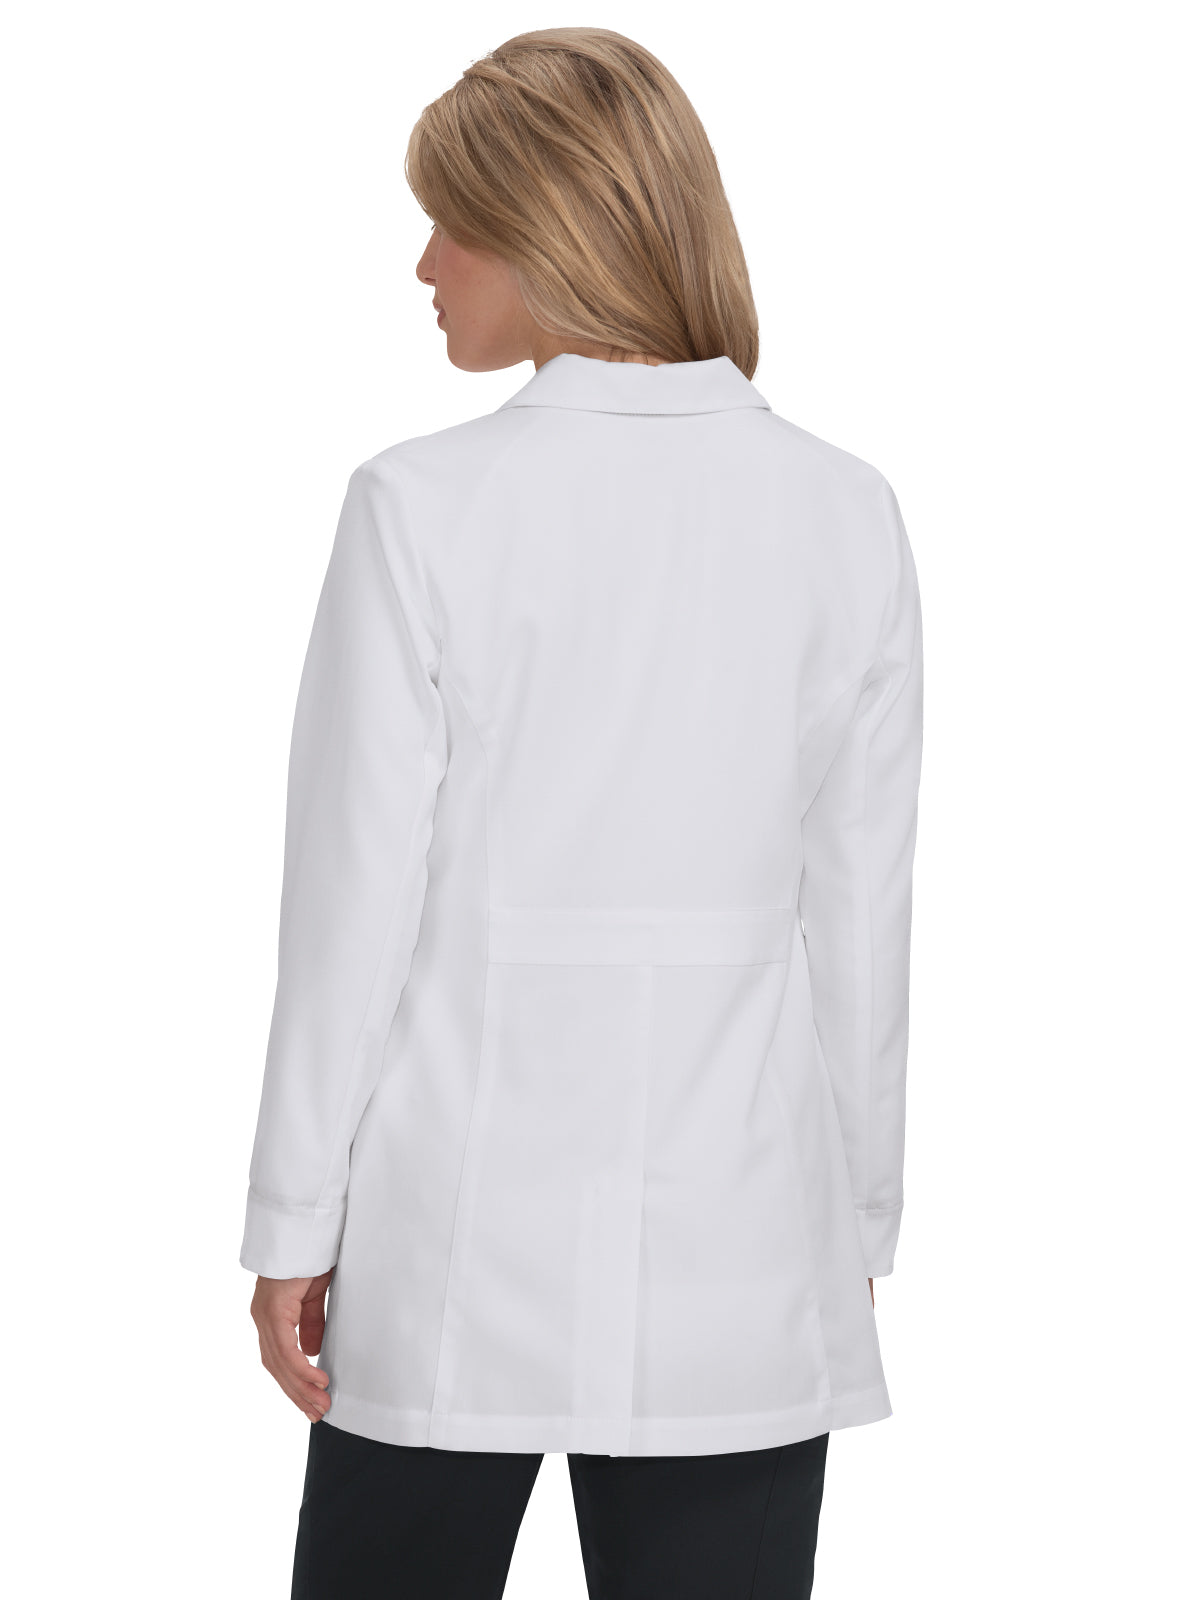 Women's Three-Pocket 32" Marigold Lab Coat